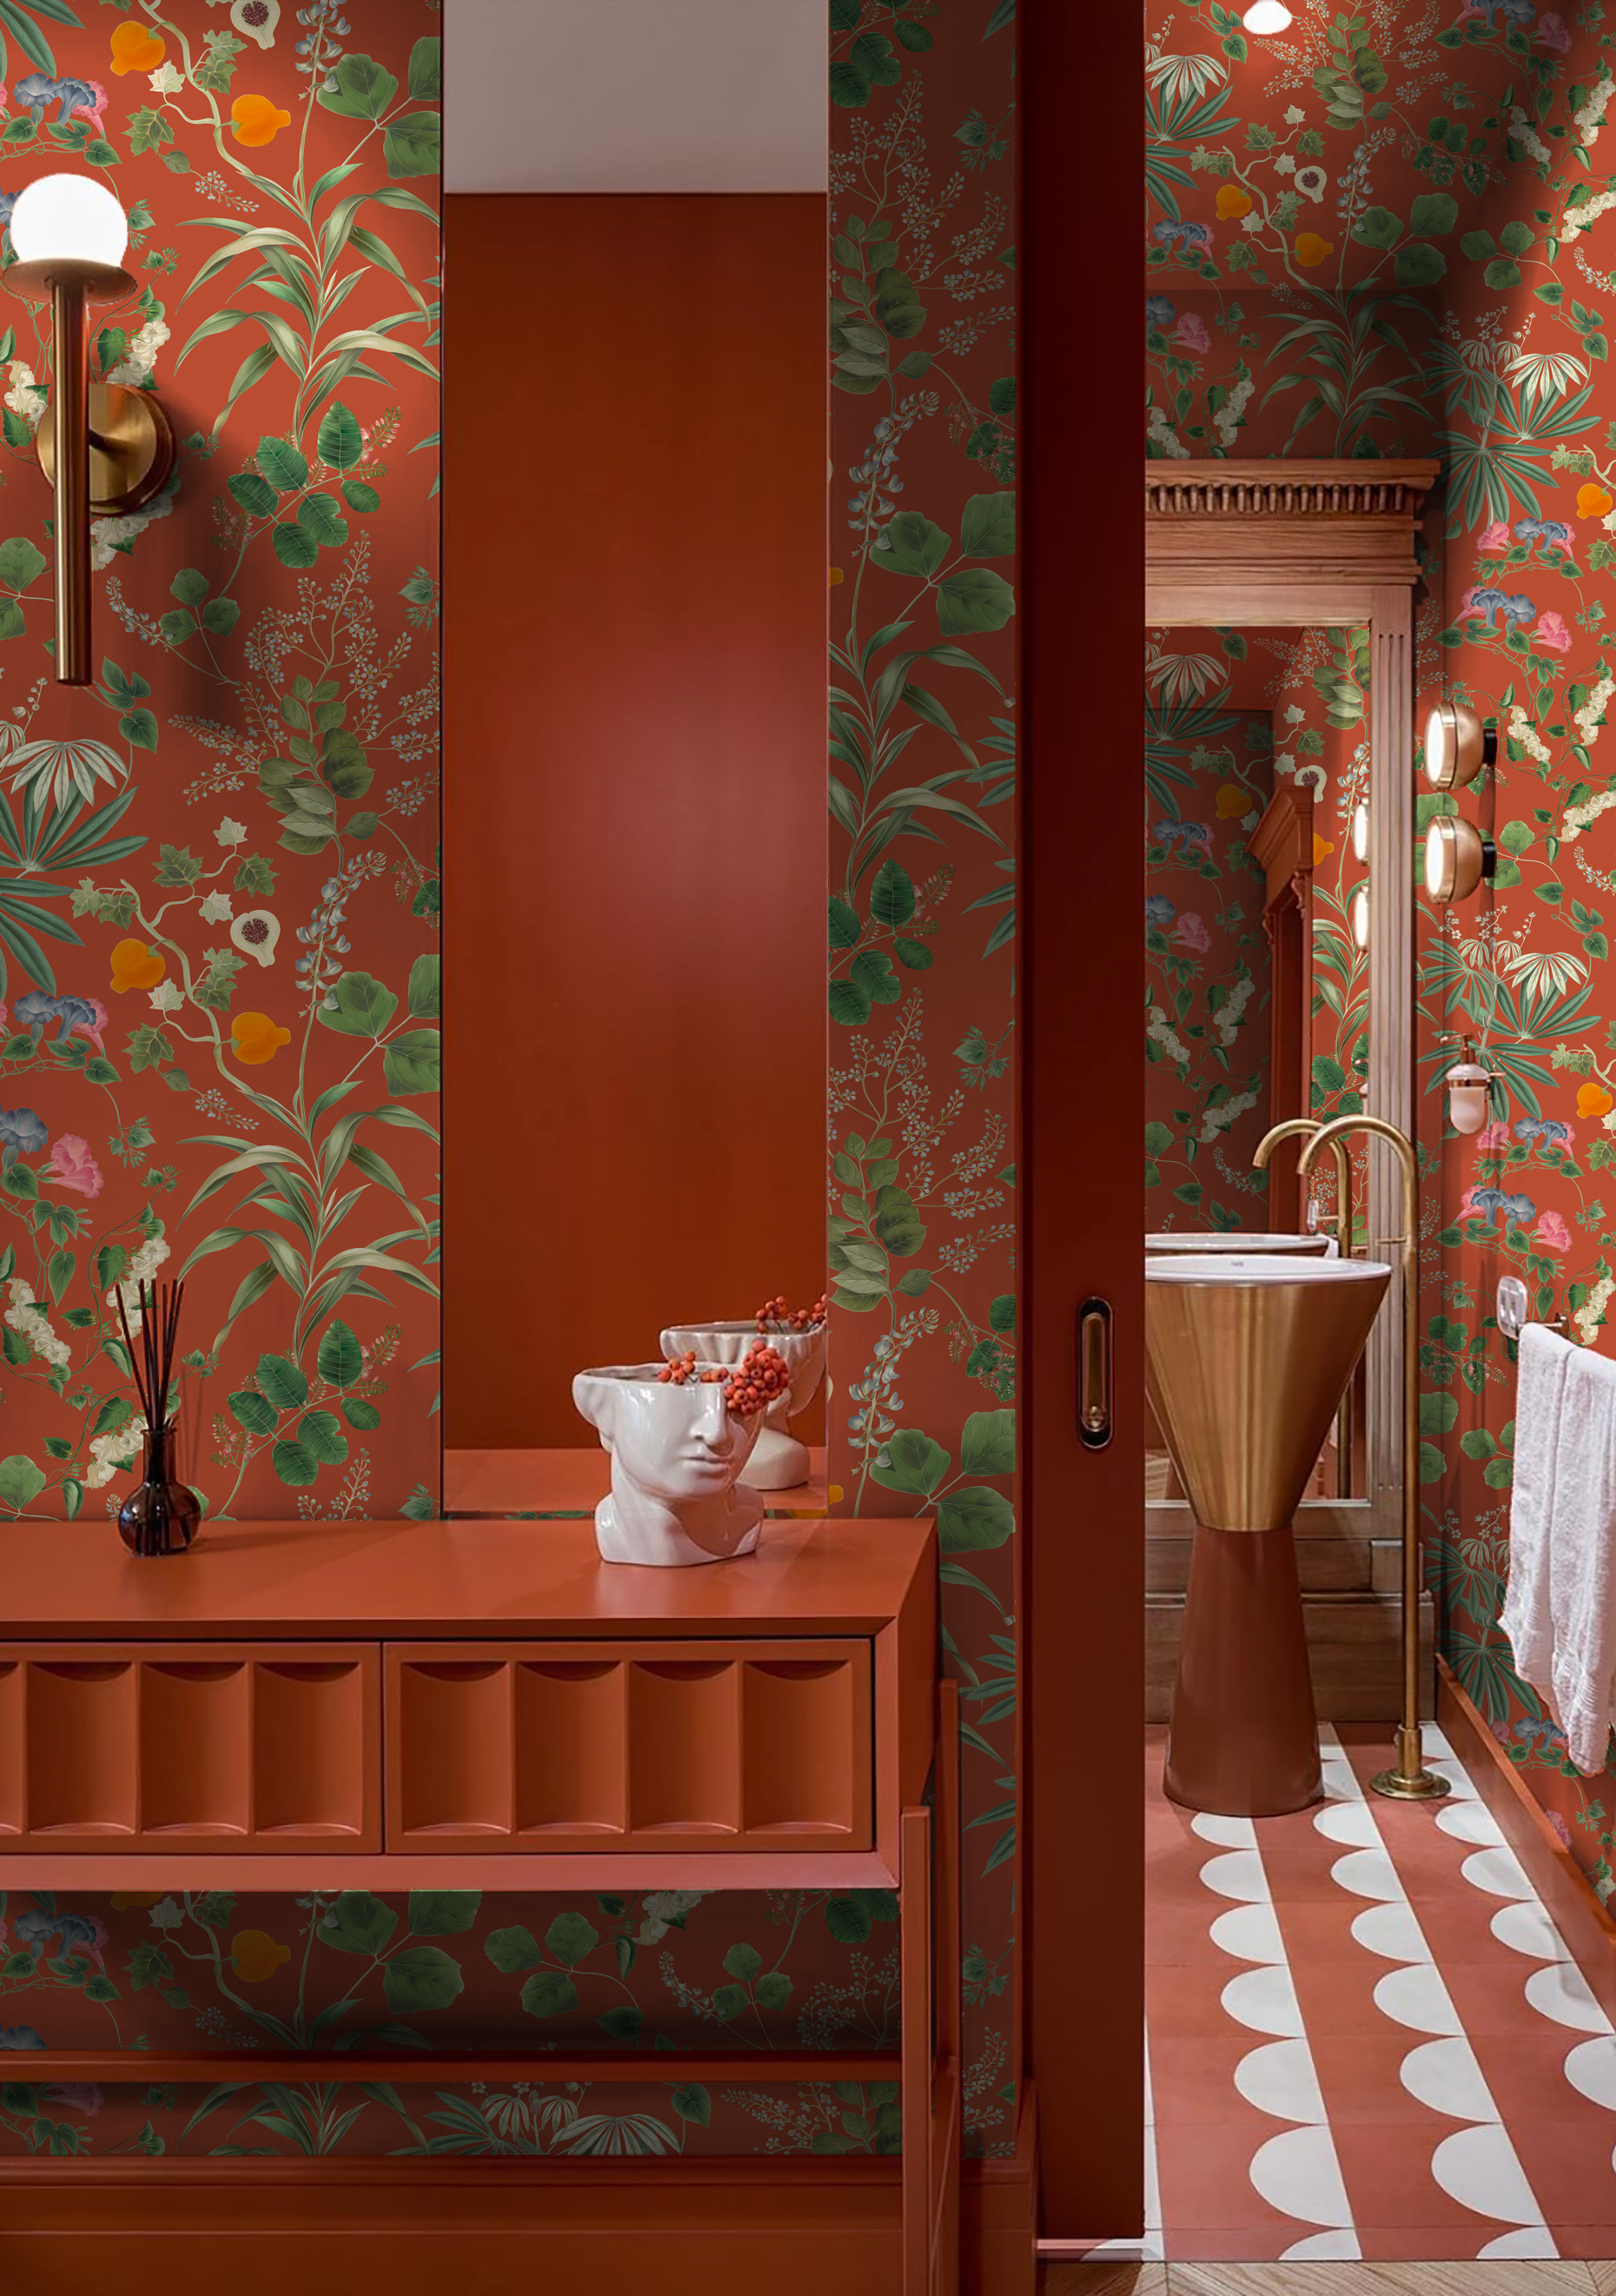 Luxury bathroom with modern sink surrounded by Orange Eden Wallpaper in Marigold from Deus ex Gardenia, Photo by HDM2 Architects.